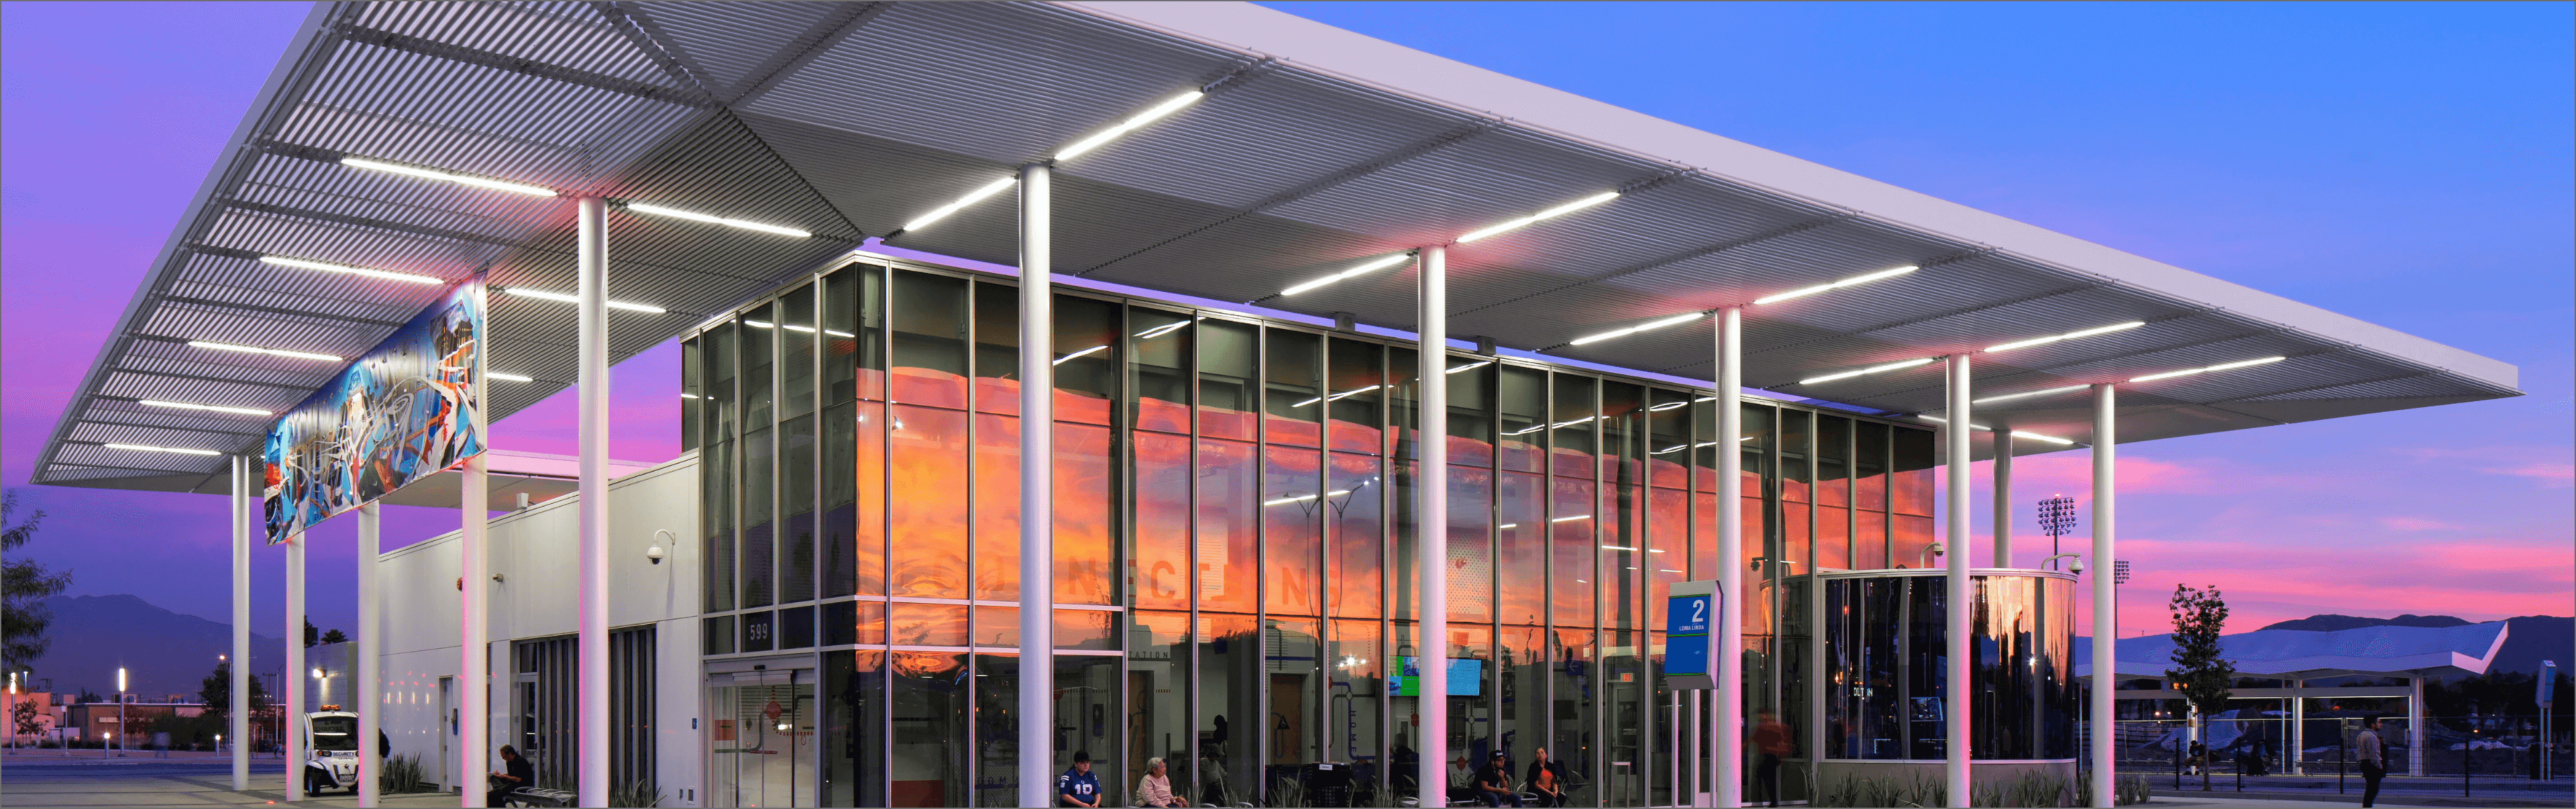 San Bernardino Transit Center at sunset